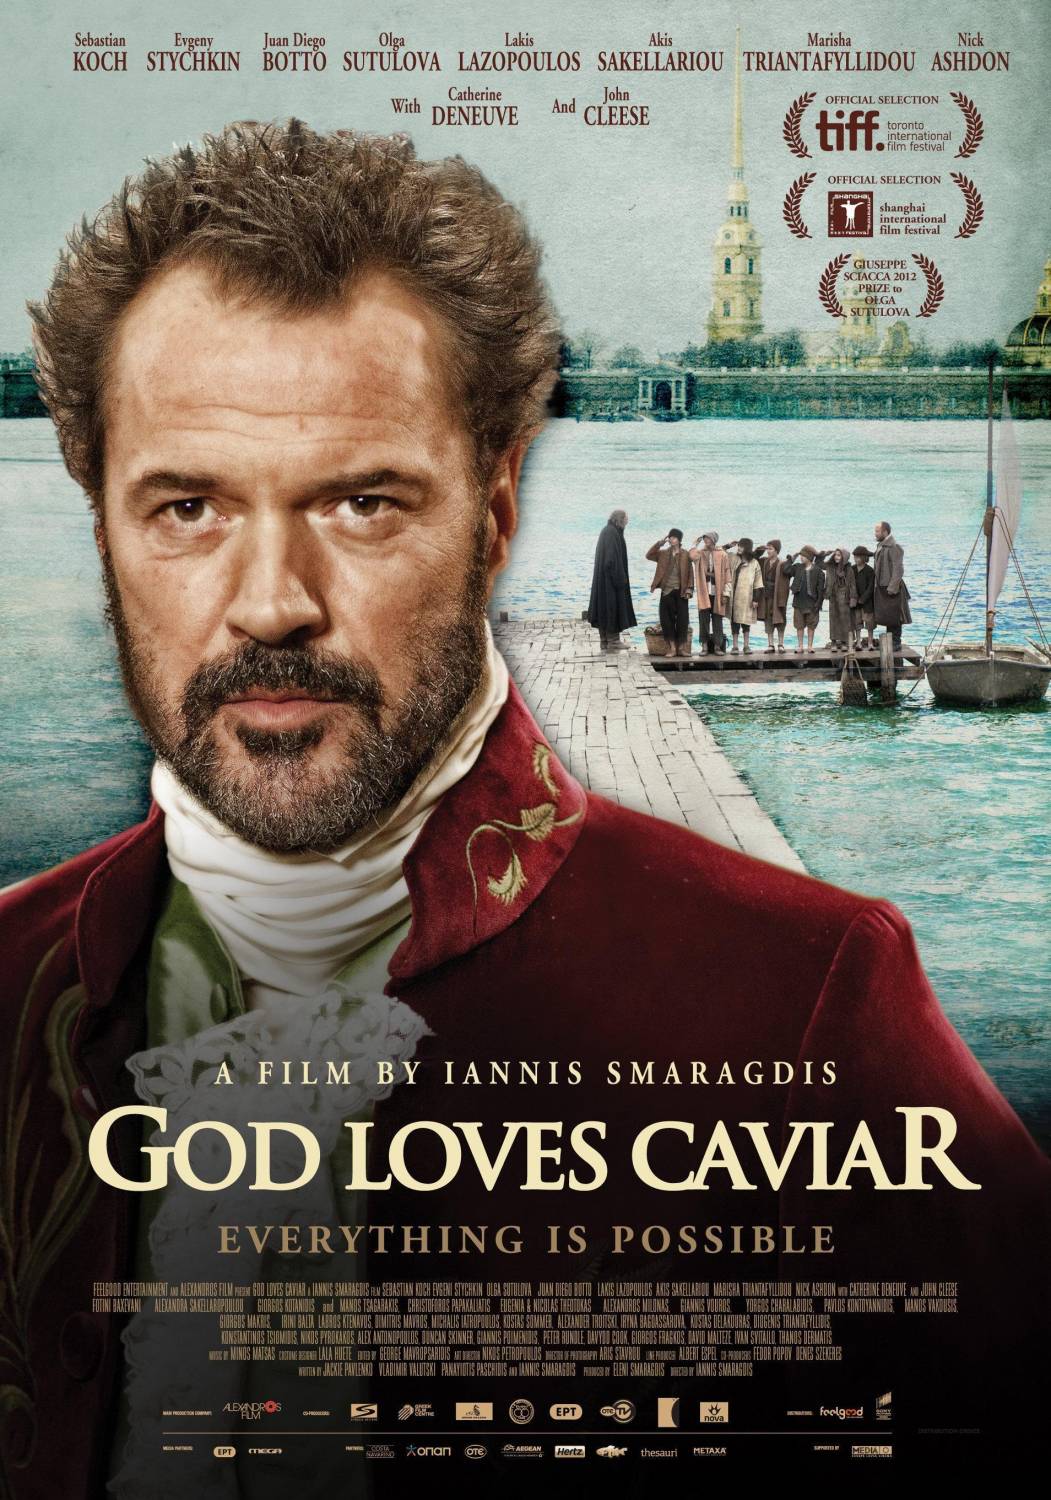 God loves caviar (2012)